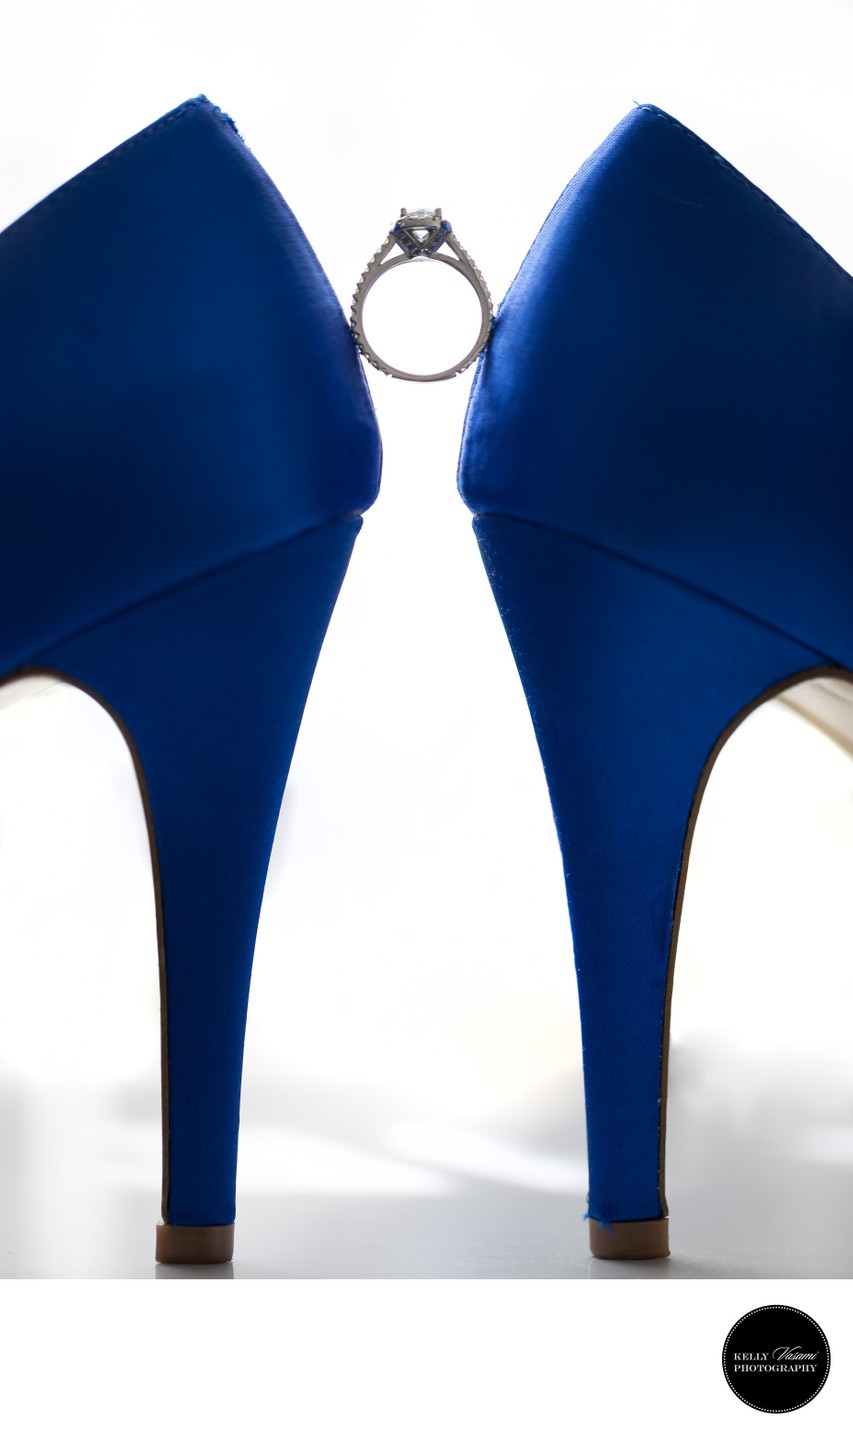 Blue Wedding Shoes & Engagement Ring | Westchester NY